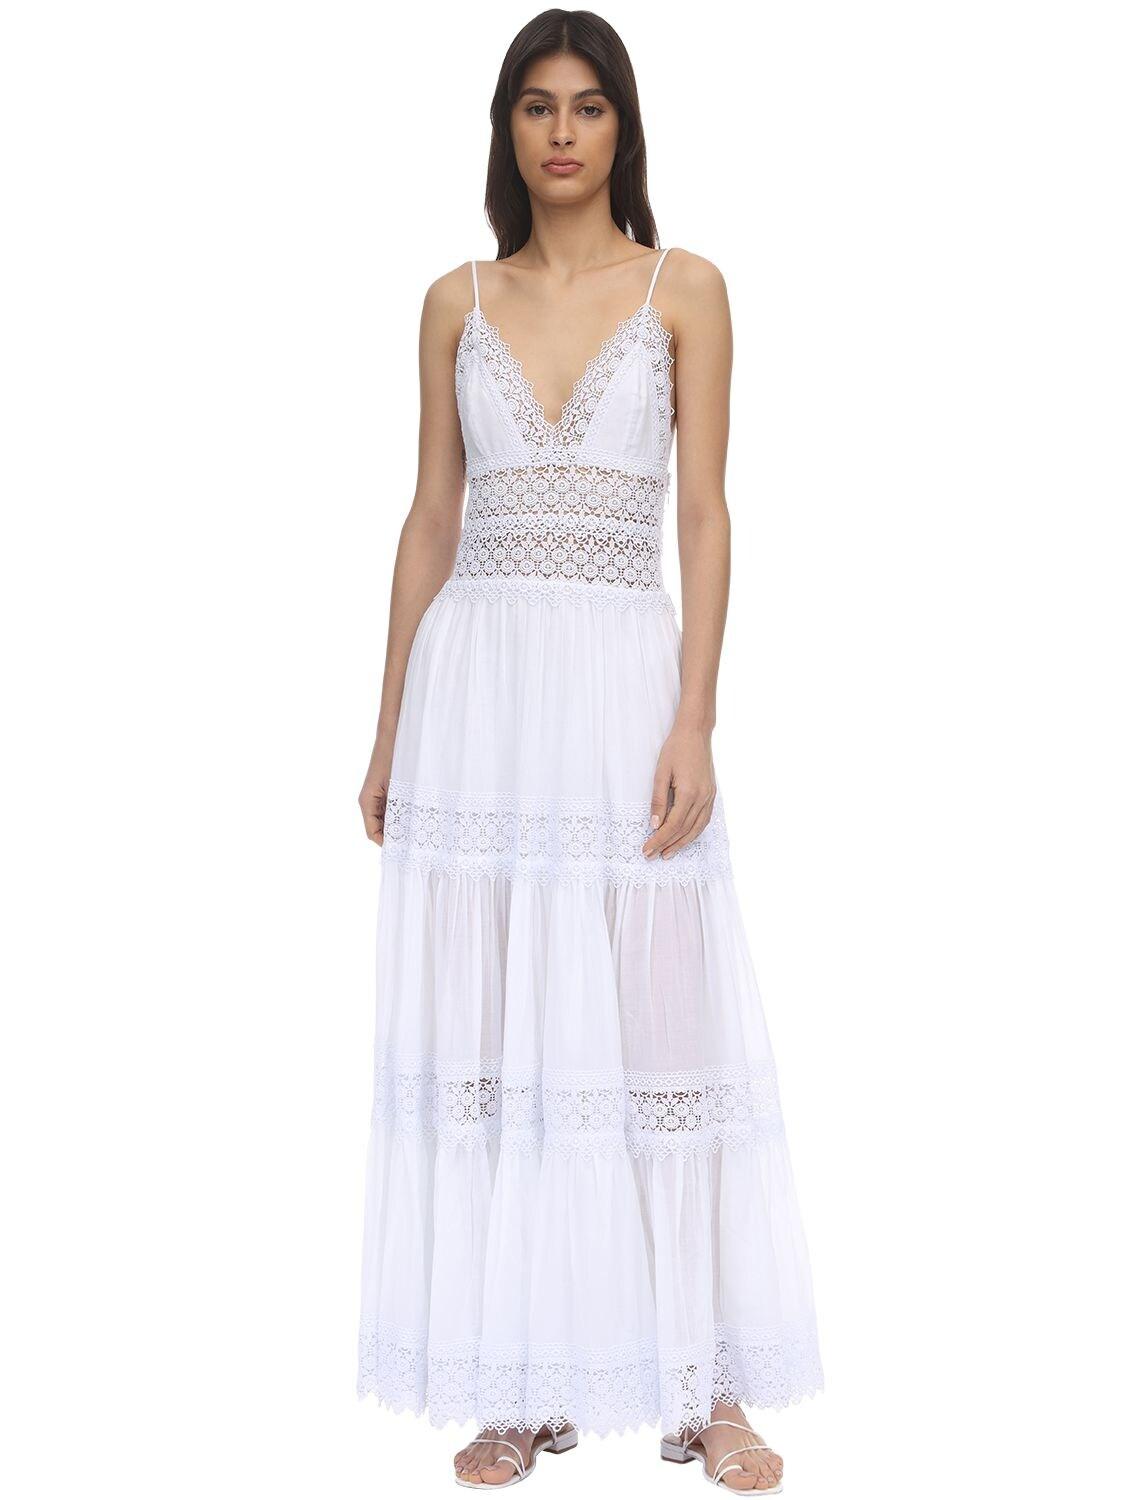 Charo Ruiz Cindy Lace & Cotton Maxi Dress in White - Lyst